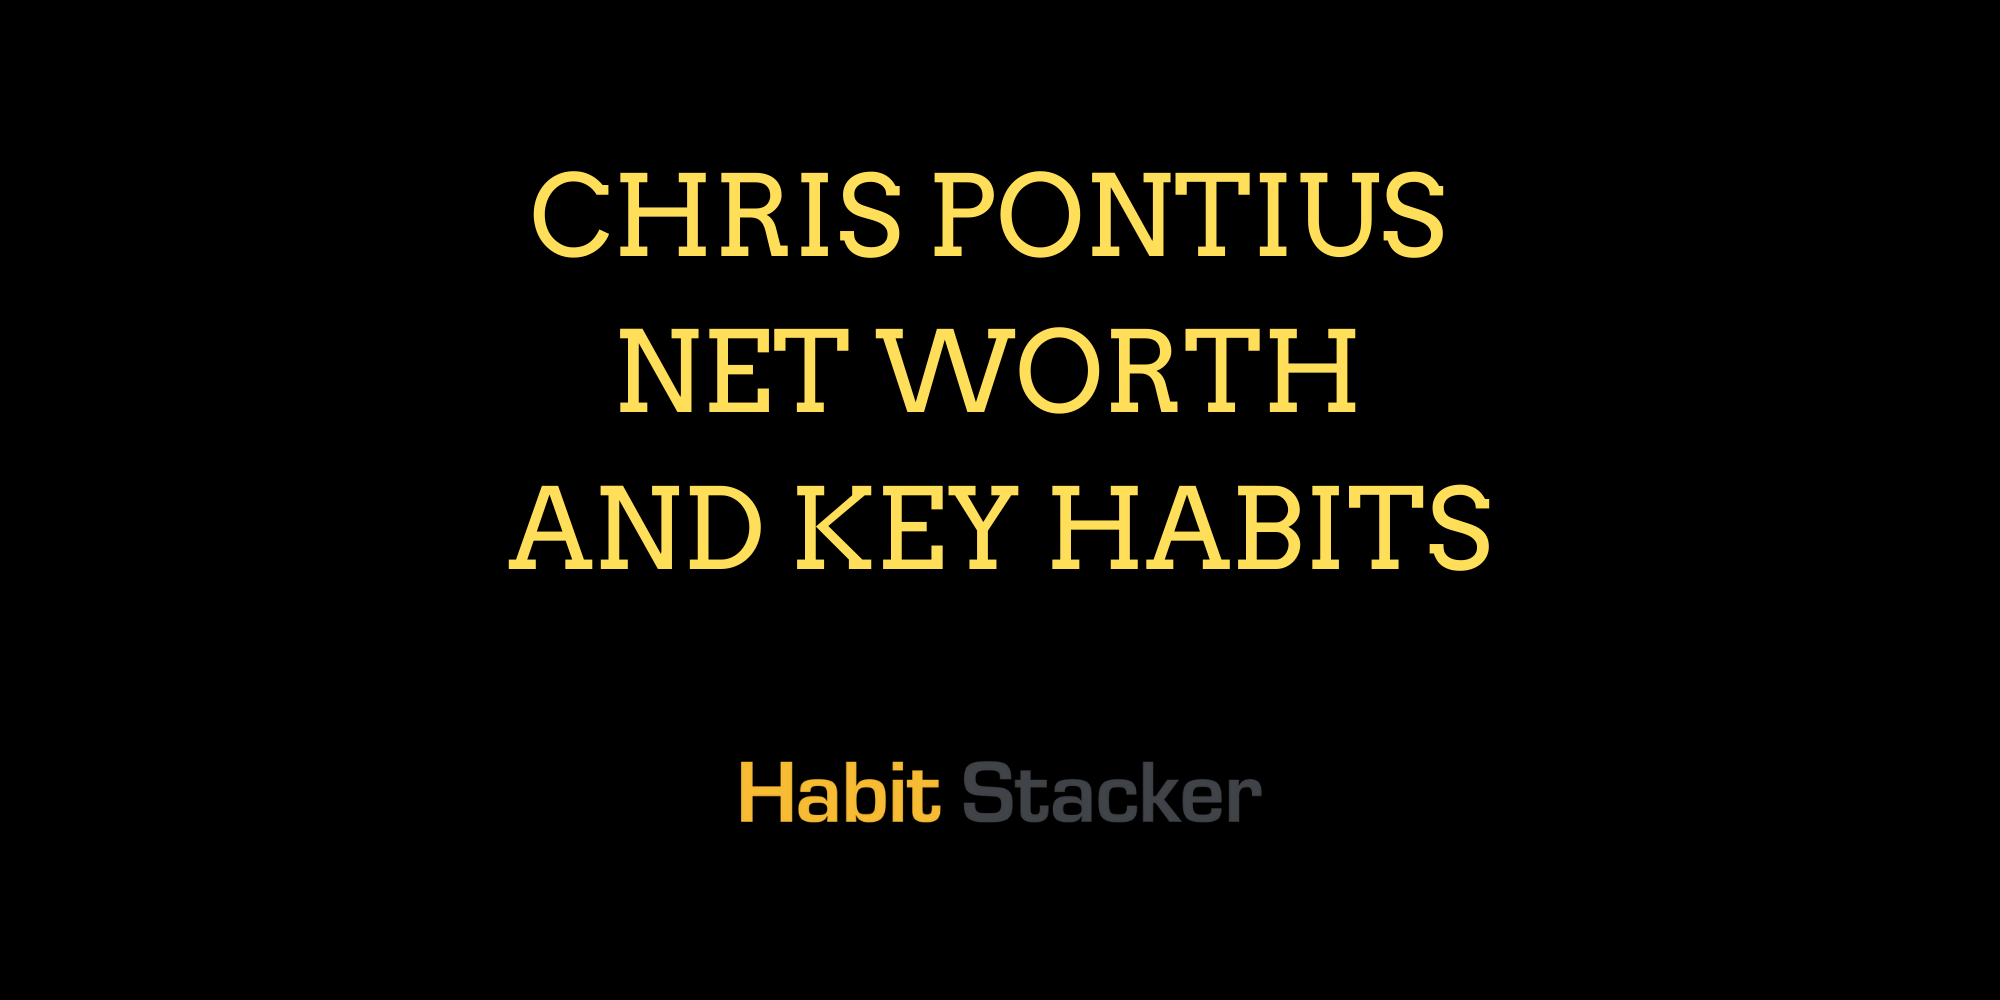 Chris Pontius Net Worth